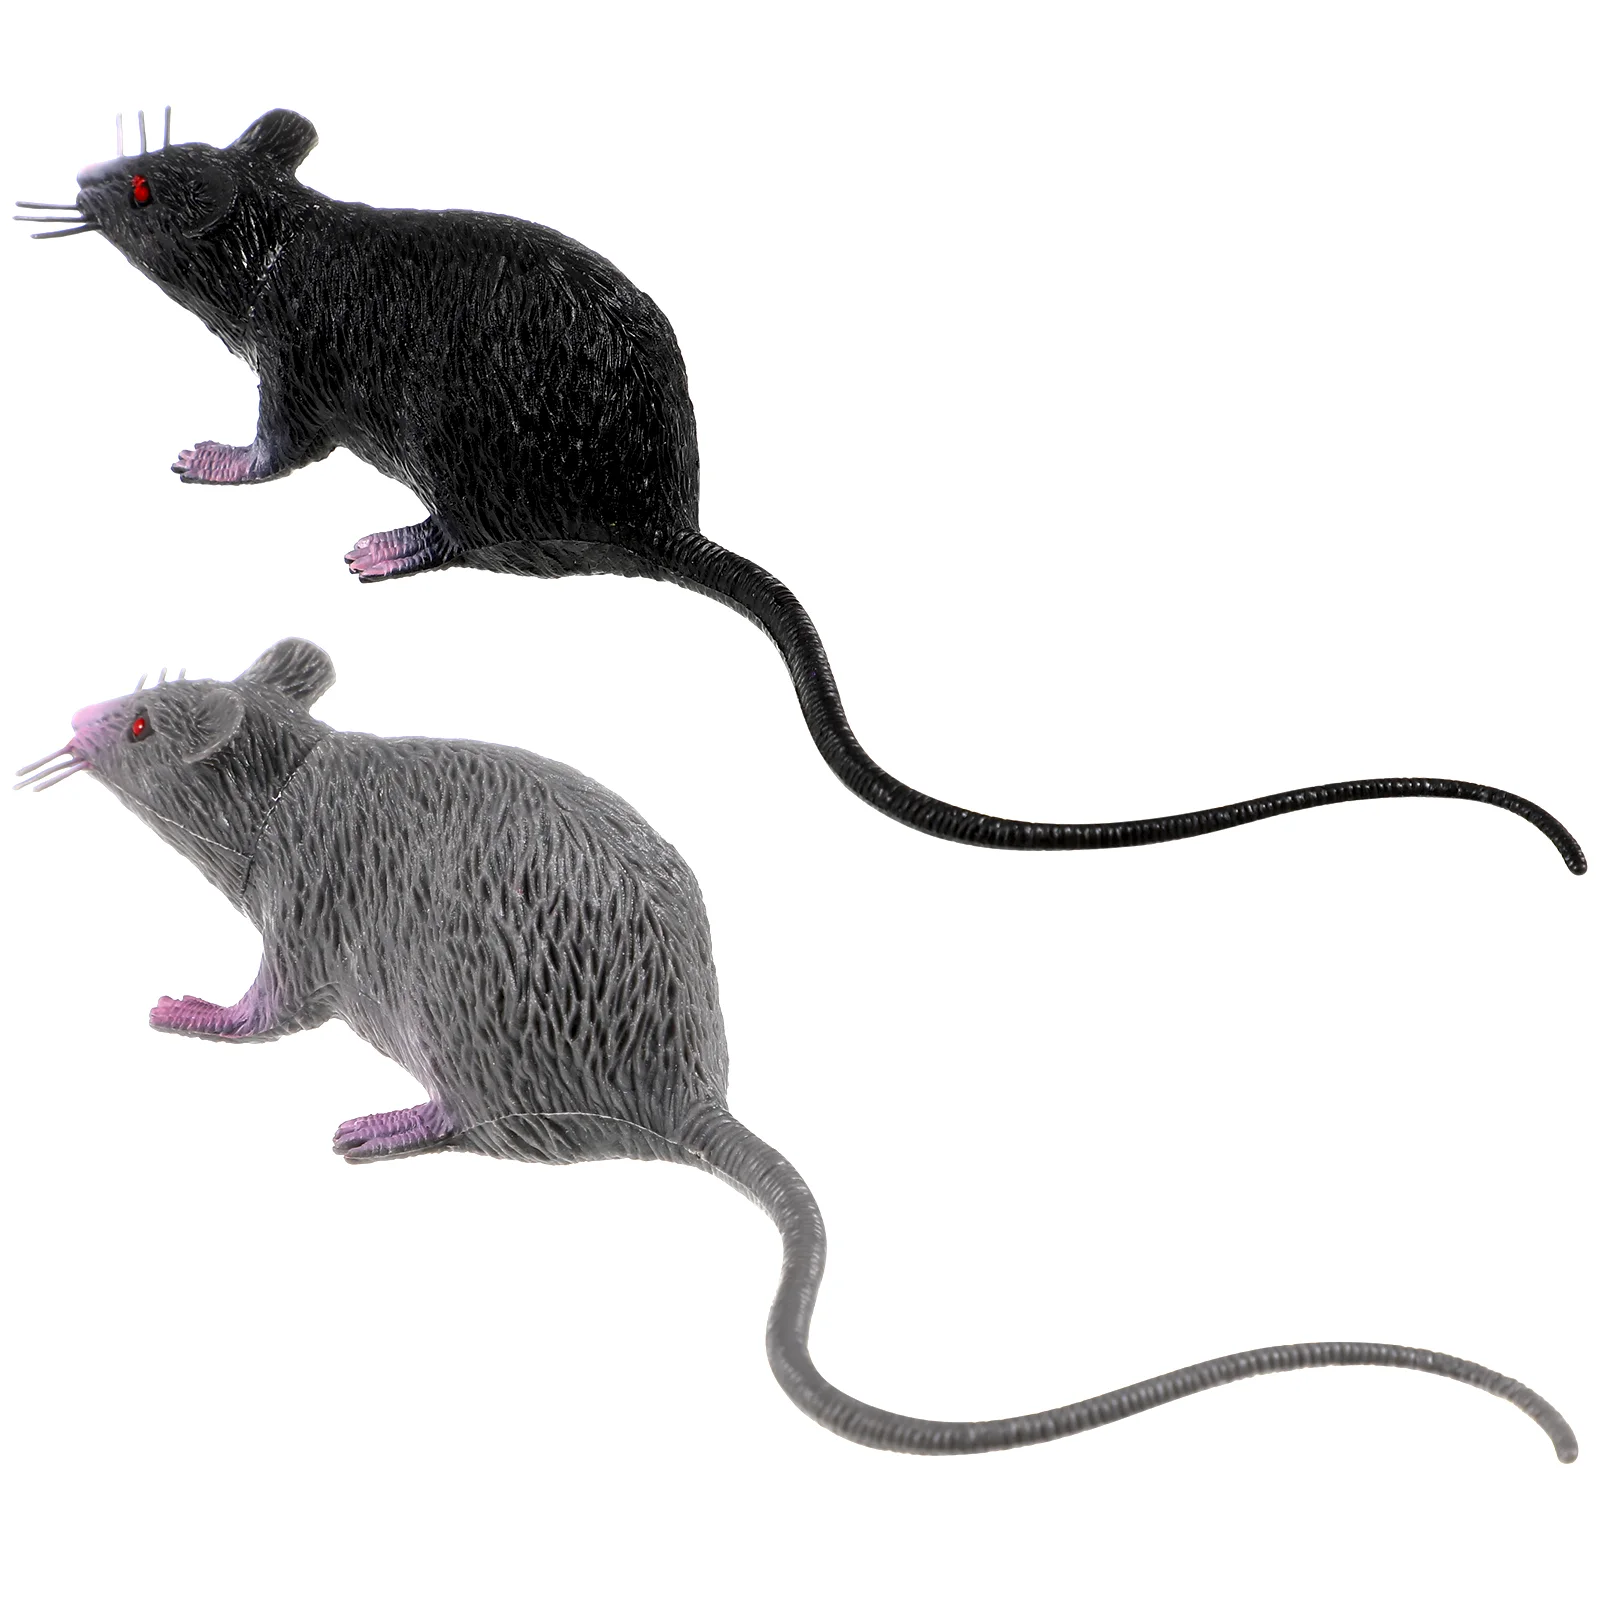 

2 Pcs Realistic Mice Creepy Toys Lifelike Spooky Rat Figures Fake Mice Toys Tricks Party Props